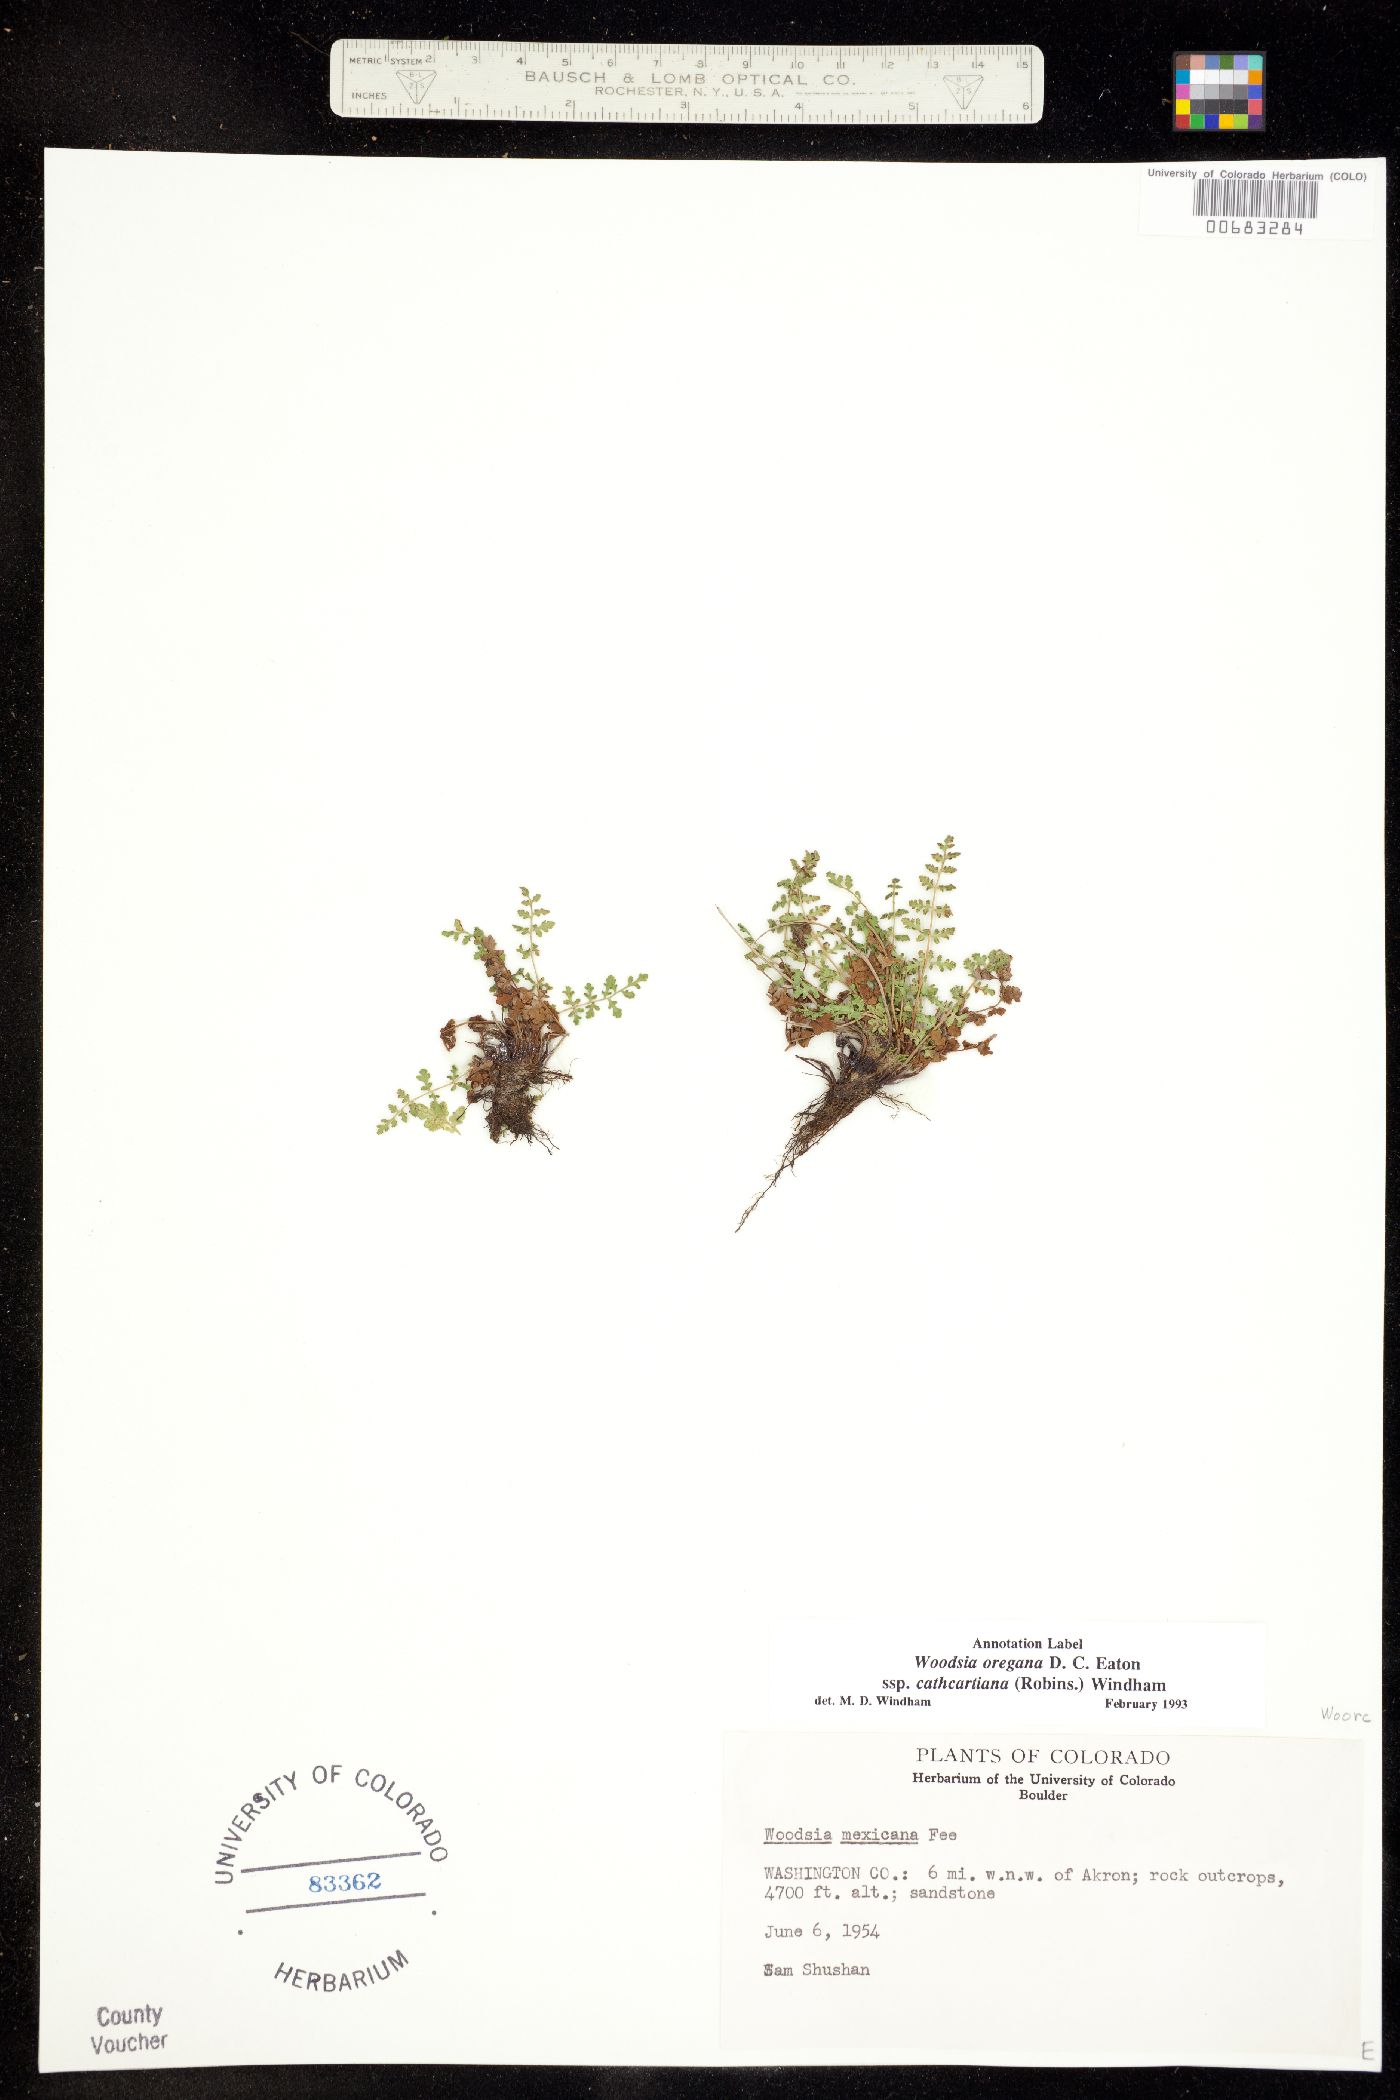 Woodsia oregana ssp. cathcartiana image